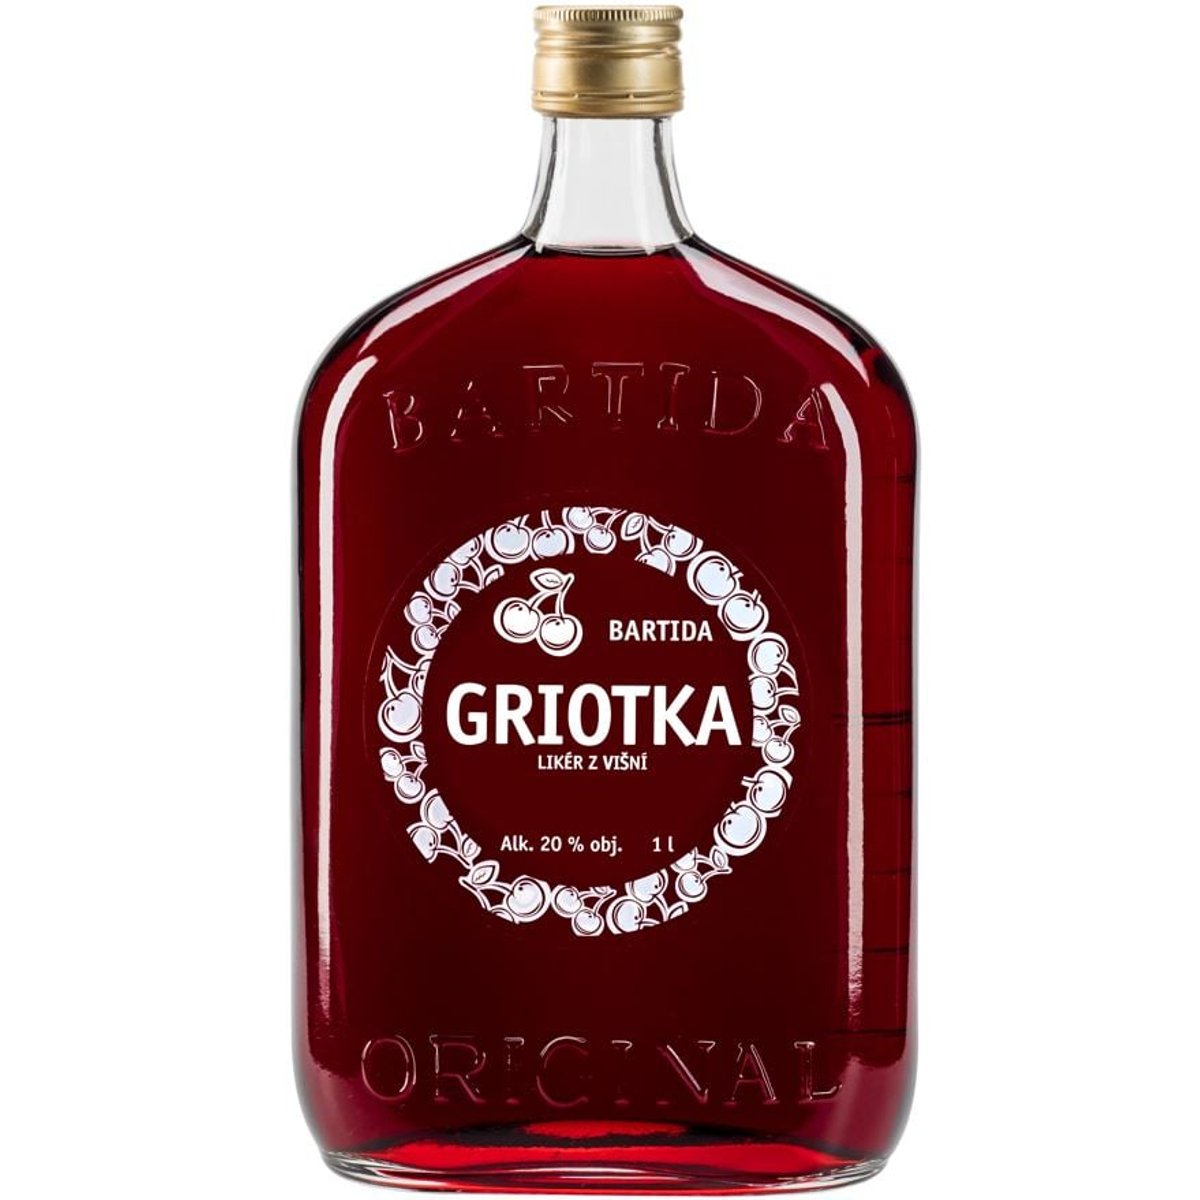 Bartida Original Griotka 20%